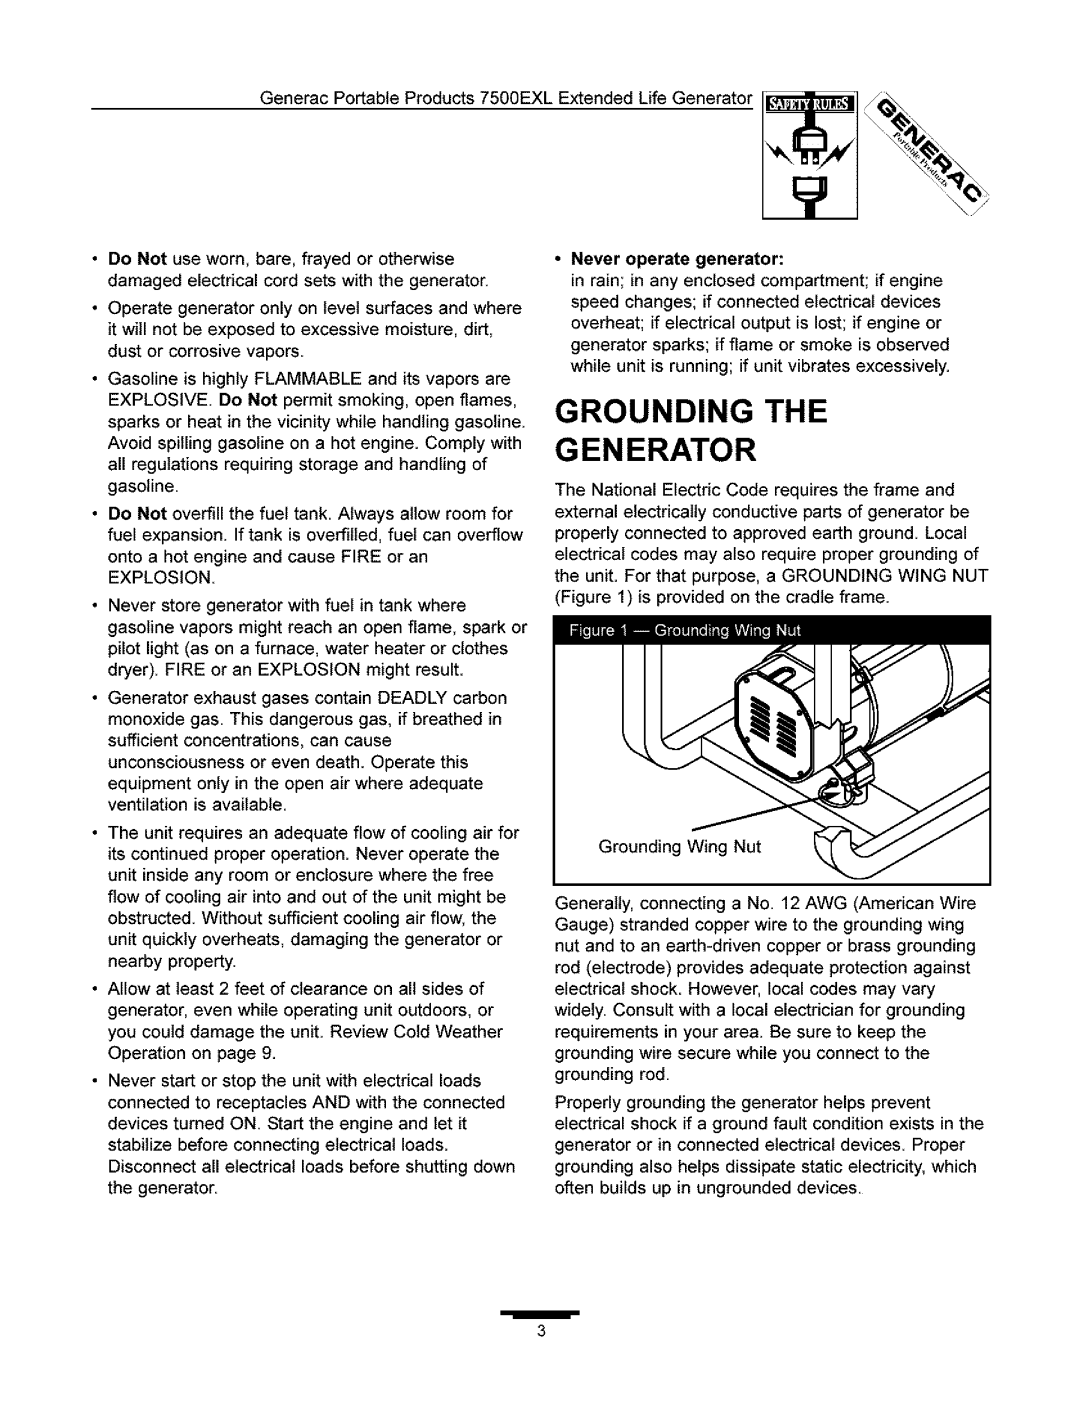 Generac 7500 Grounding The Generator, DoNotuseworn,bare,frayedorotherwise, damagedelectricalcordsetswiththegenerator 